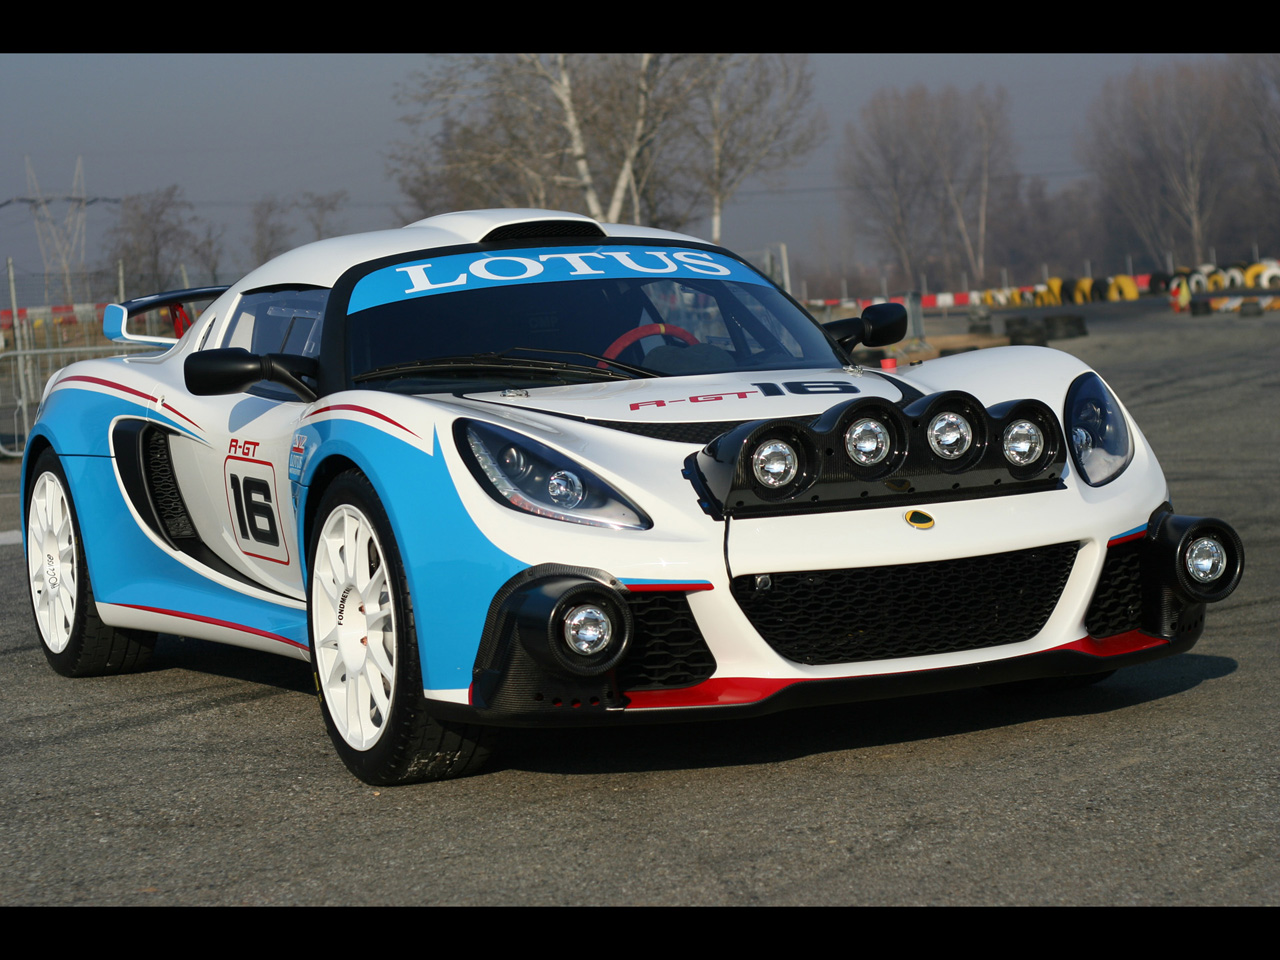 2012 Lotus Exige R-GT Track Run